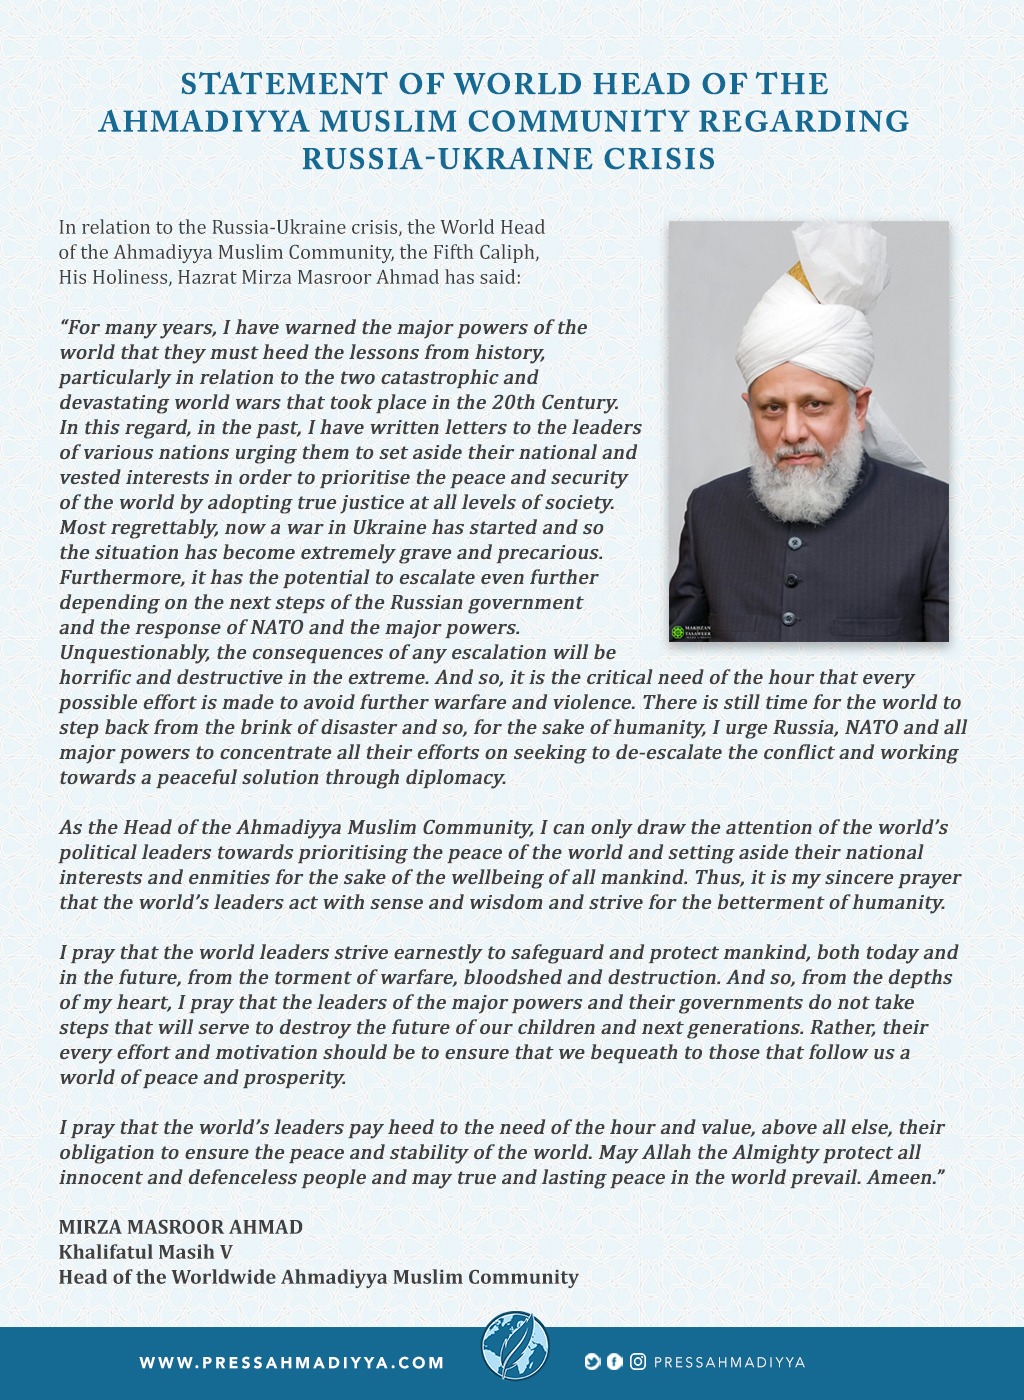 Statement of World Head of the Ahmadiyya Muslim Community Regarding Russia-Ukraine Crisis